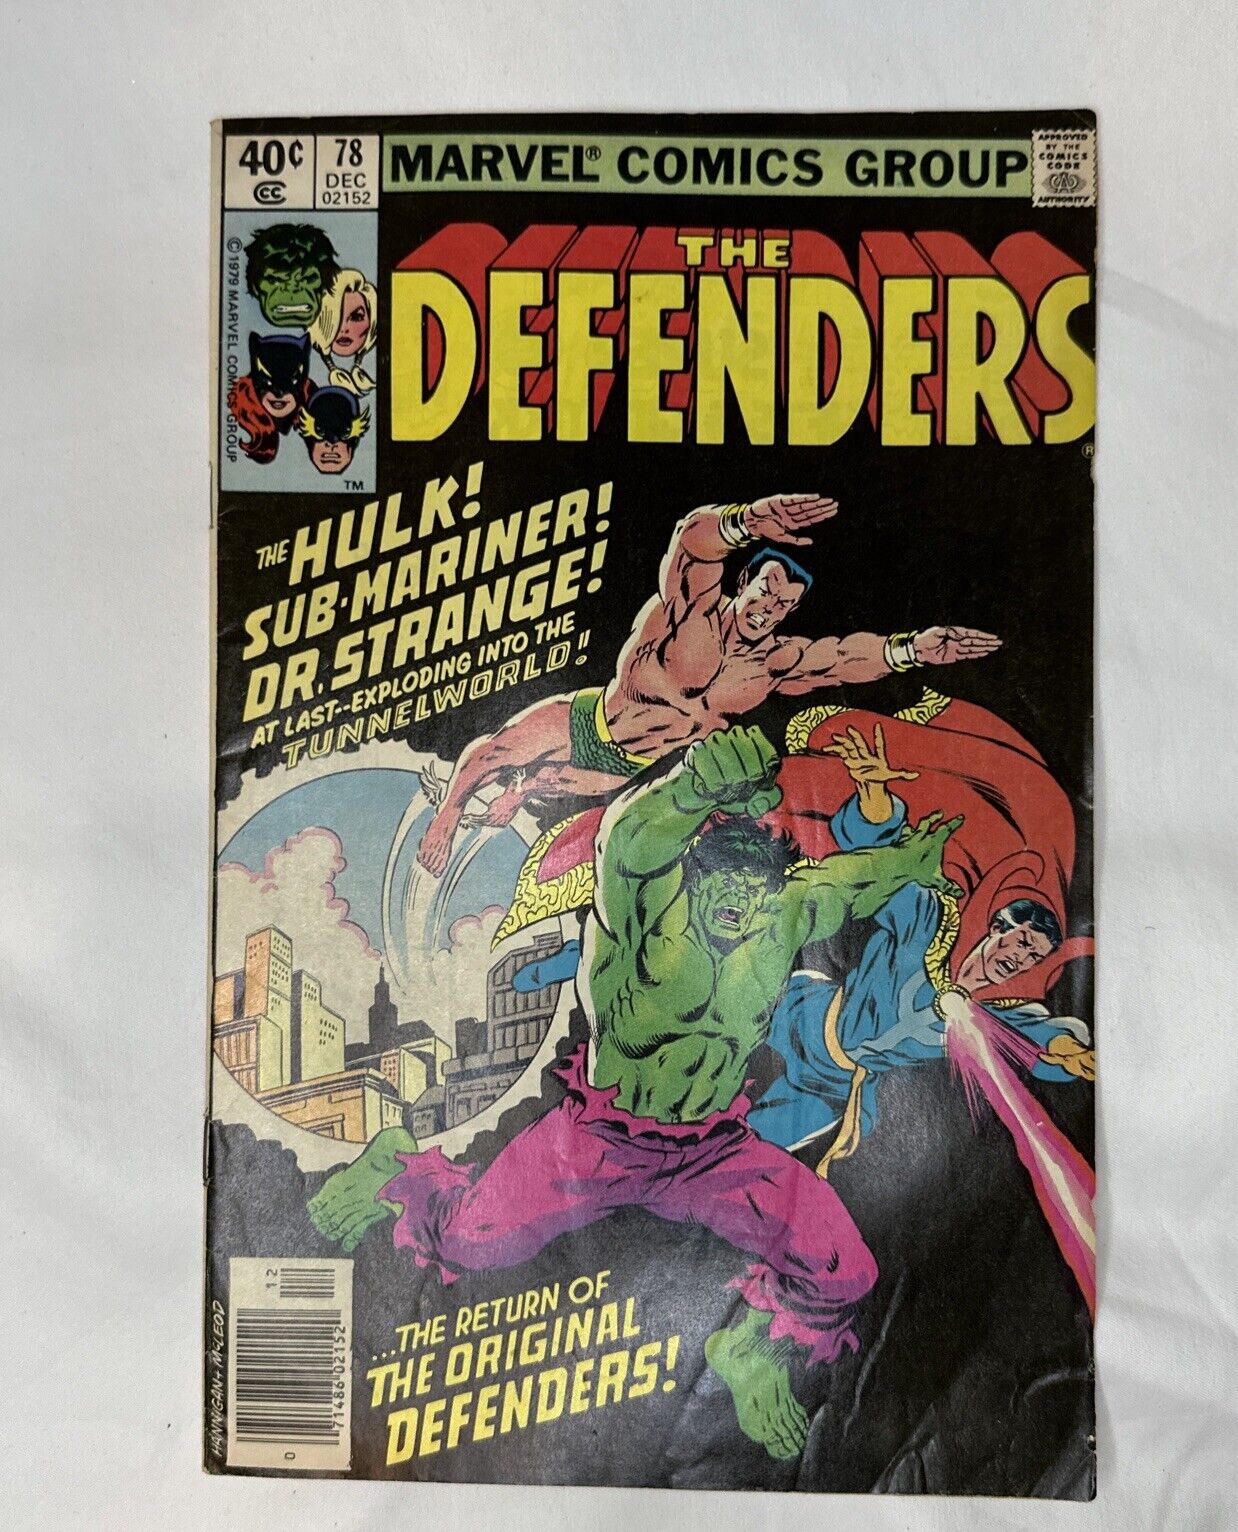 The Defenders #78 (1976)